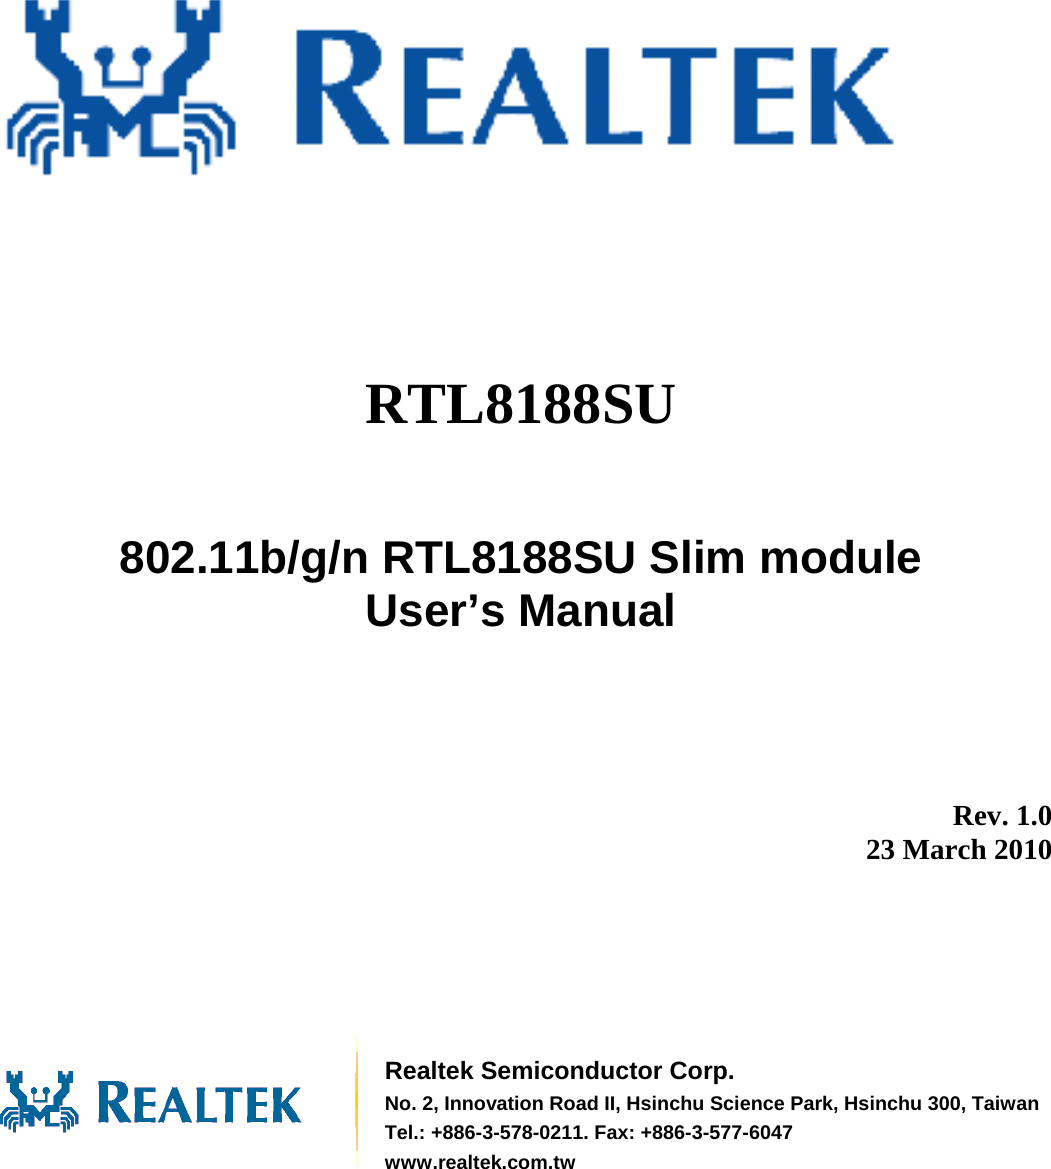            RTL8188SU   802.11b/g/n RTL8188SU Slim module User’s Manual          Rev. 1.0 23 March 2010        Realtek Semiconductor Corp. No. 2, Innovation Road II, Hsinchu Science Park, Hsinchu 300, TaiwanTel.: +886-3-578-0211. Fax: +886-3-577-6047 www.realtek.com.tw 